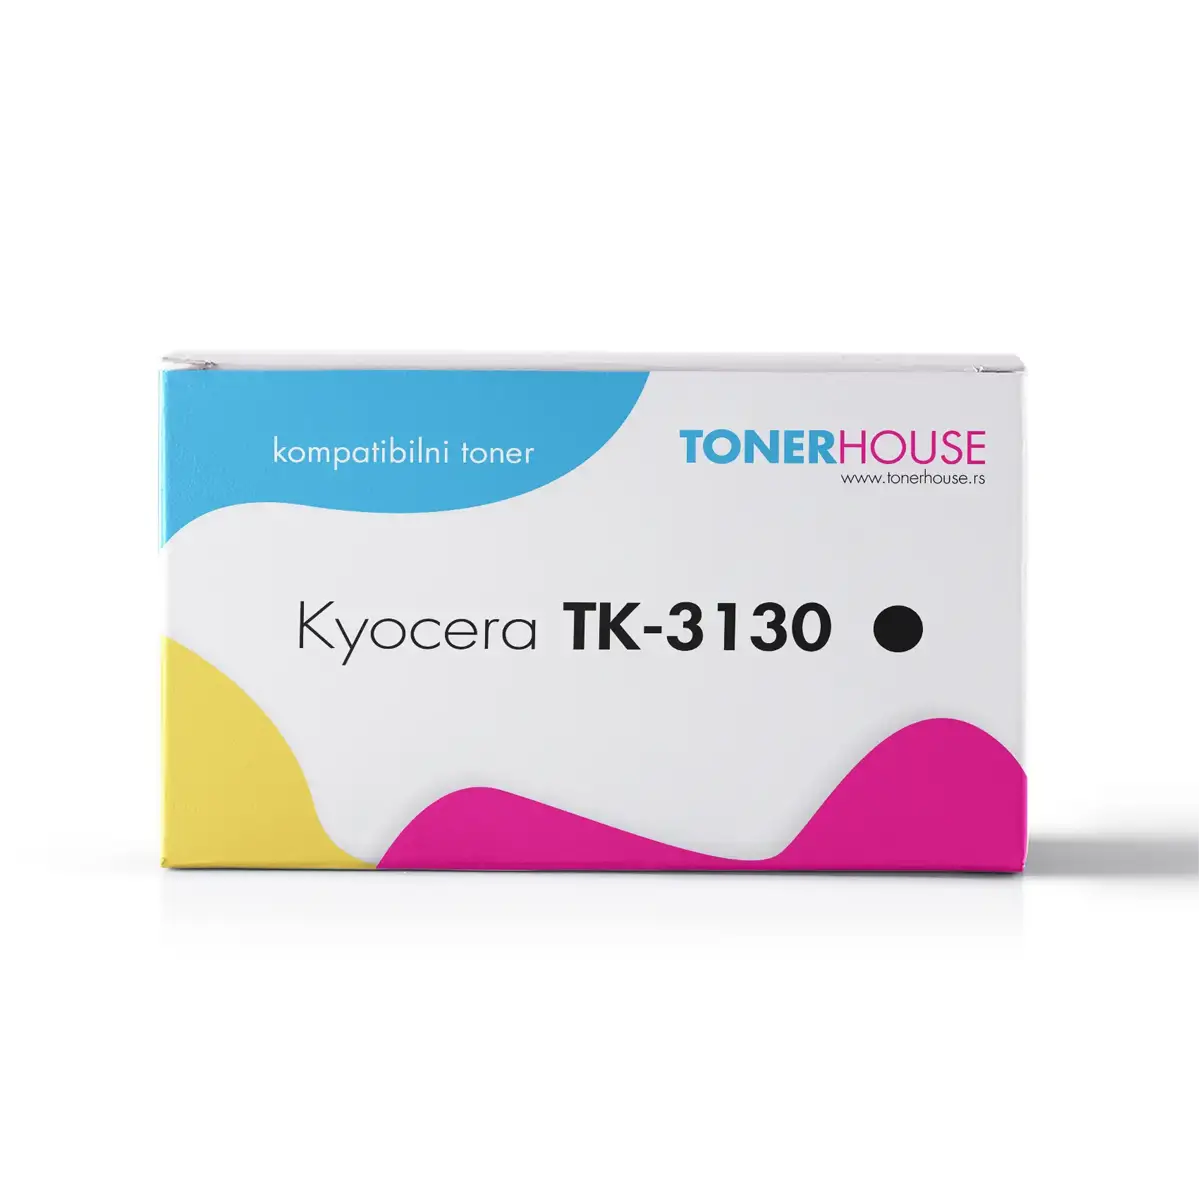 Kyocera TK-3130 Toner Kompatibilni